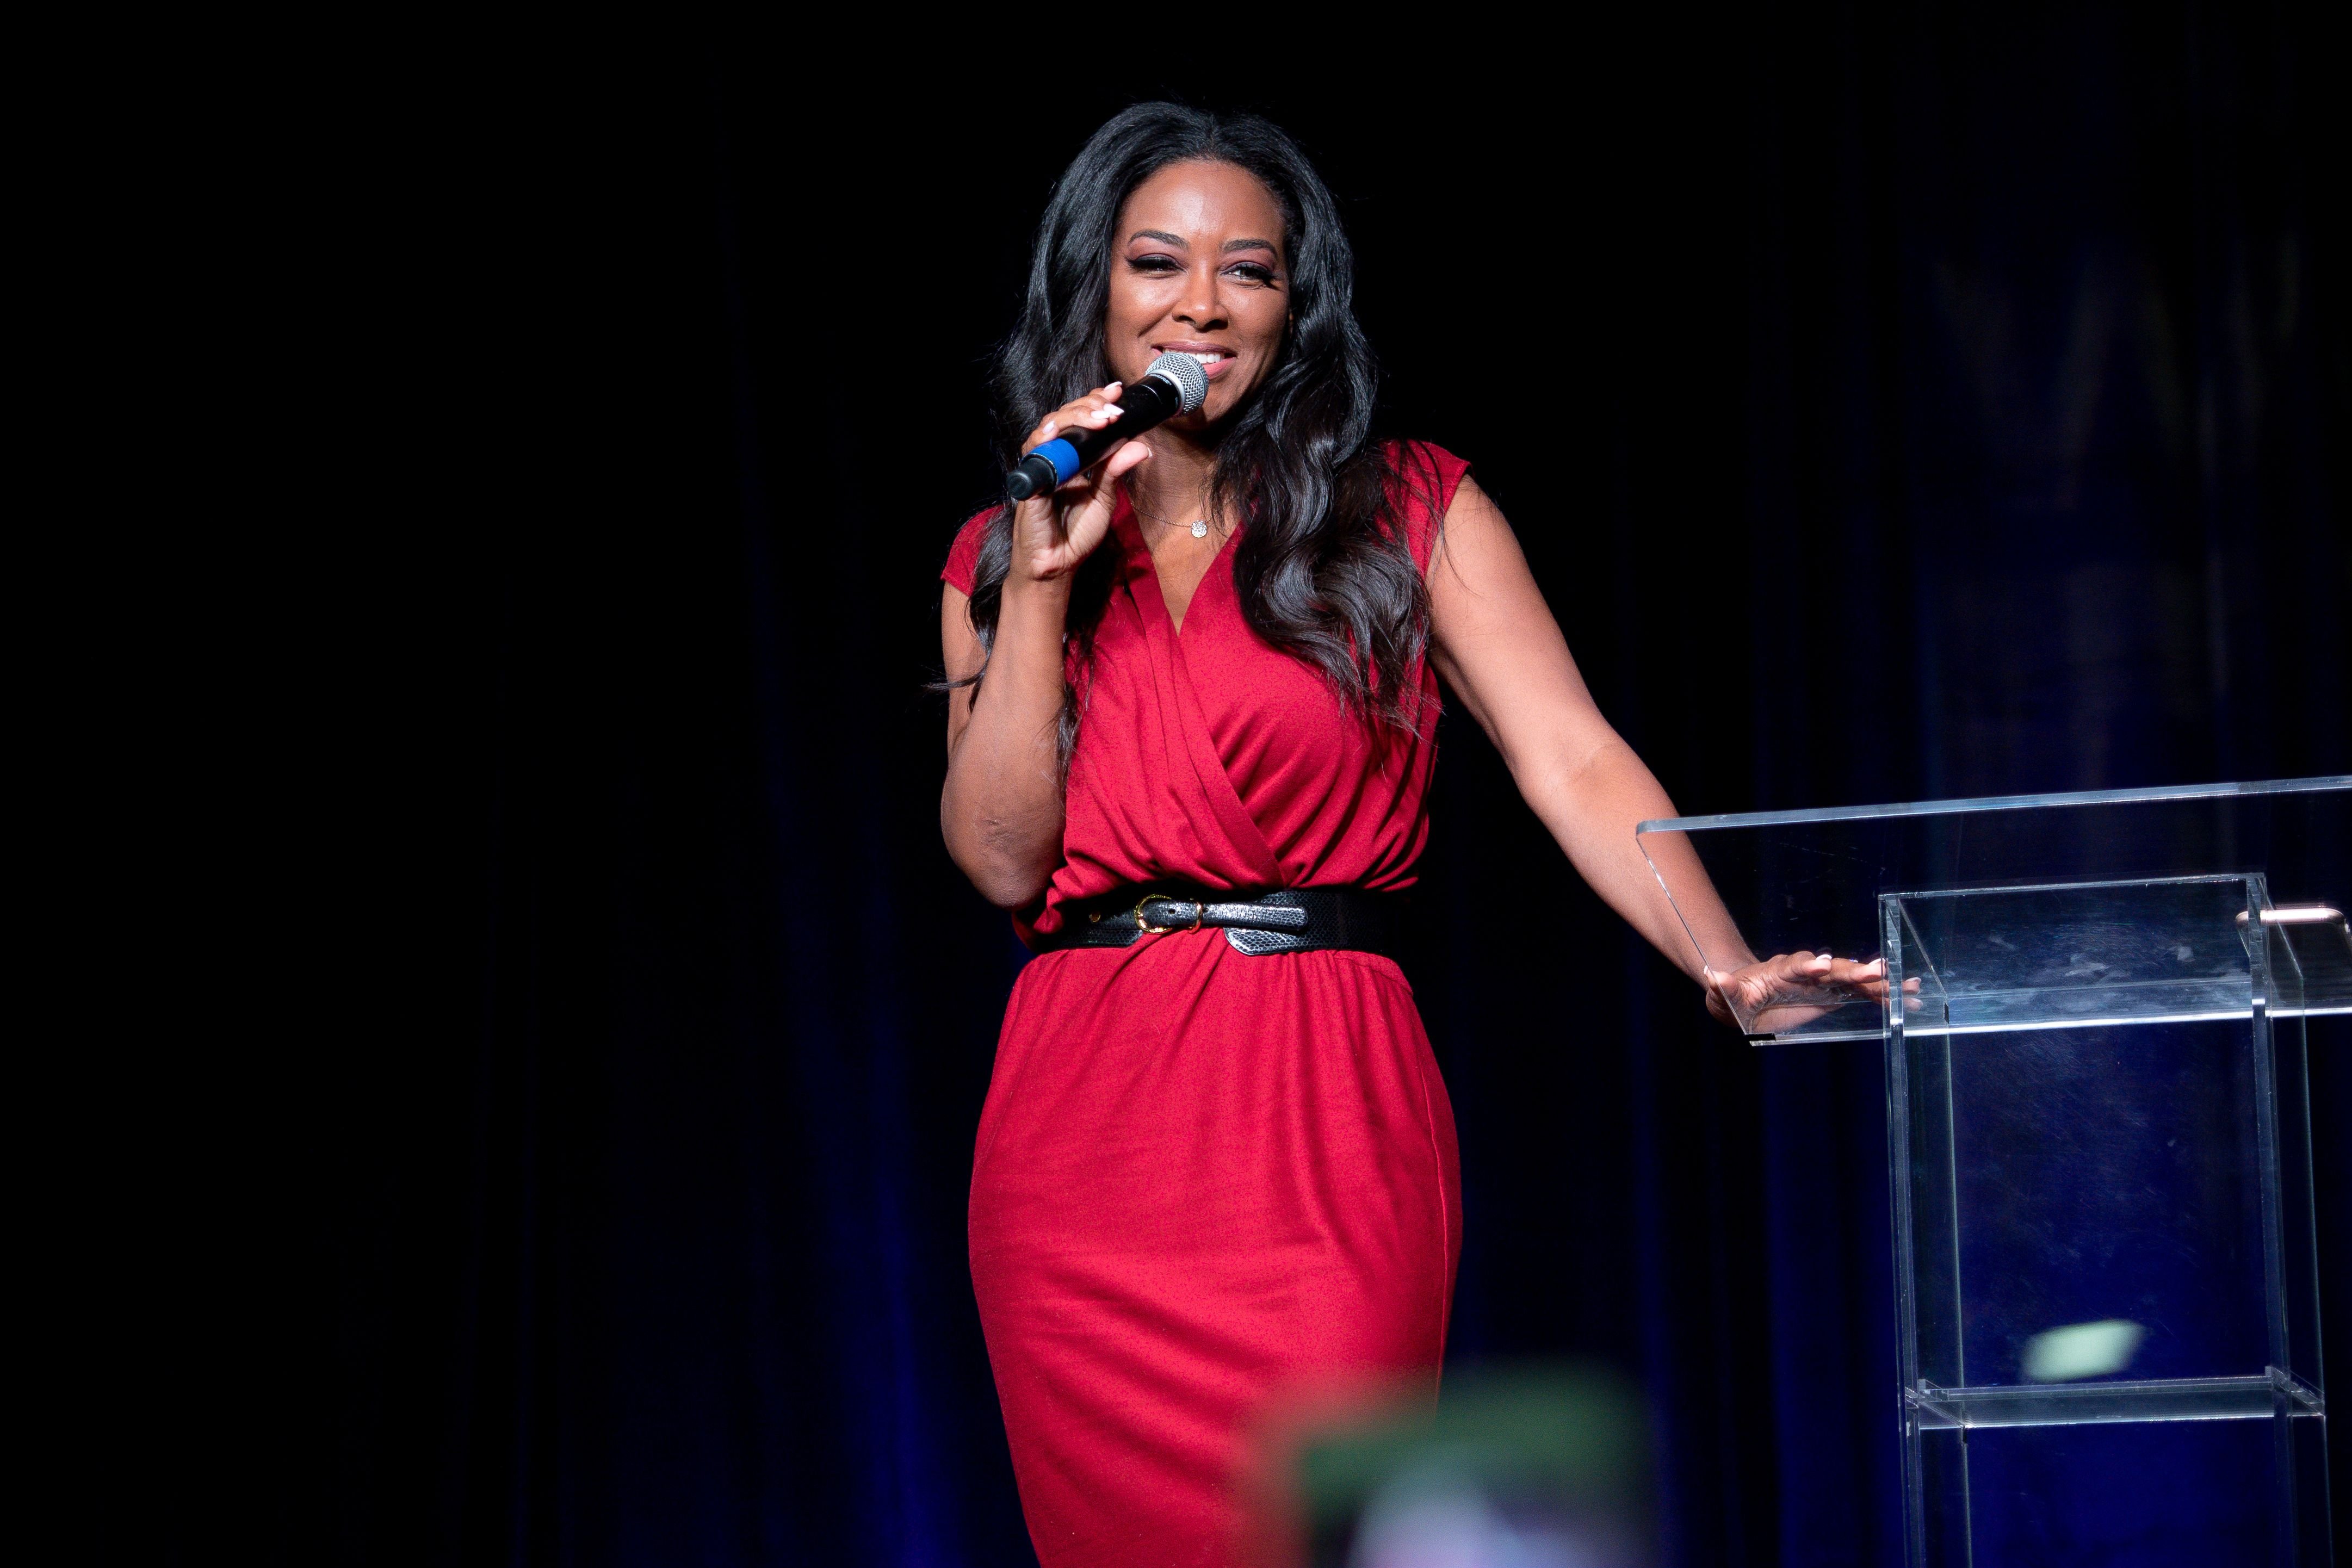 Kenya Moore spoke at the "Atlanta Ultimate Women's Expo" at Georgia World Congress Center on November 5, 2017 | Photo: Getty Images